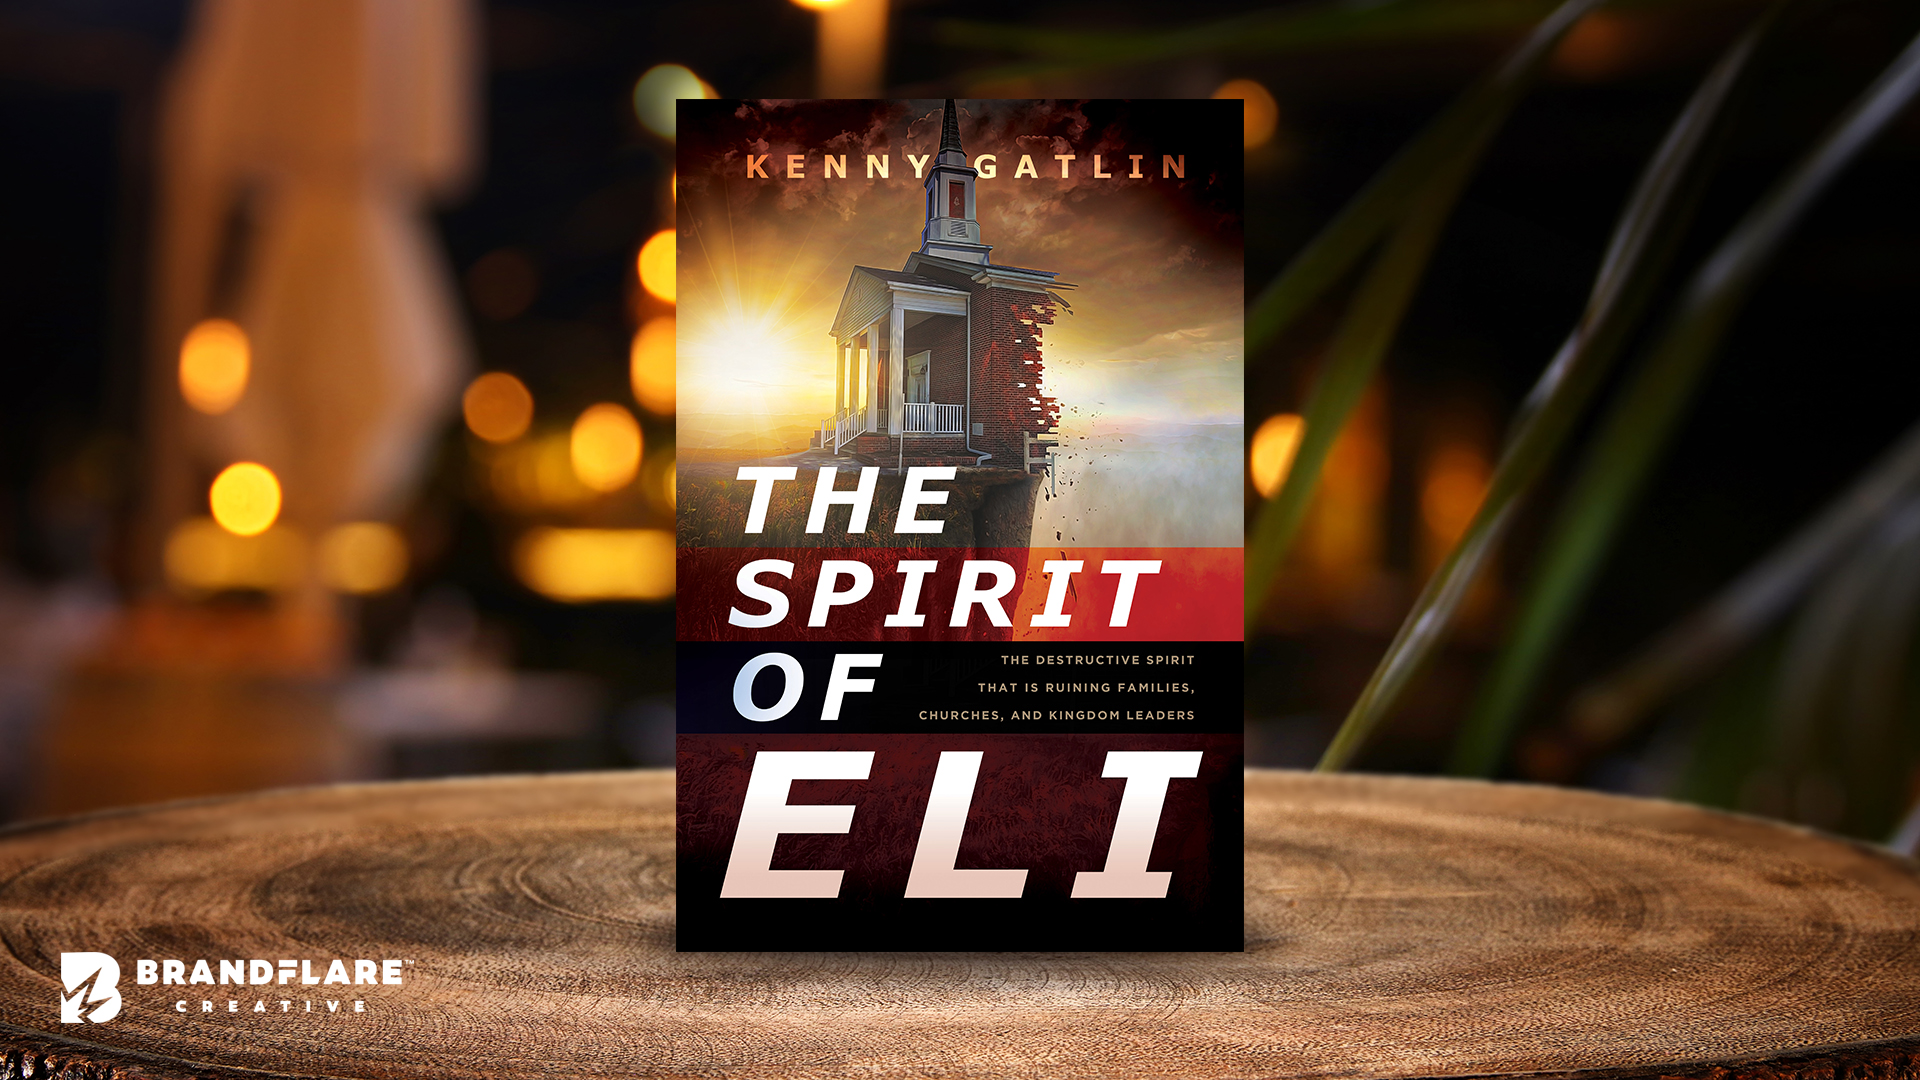 BrandFlare Creative - The Spirit of Eli - Pastor Kenny Gatlin - Book Cover Design Formatting Services